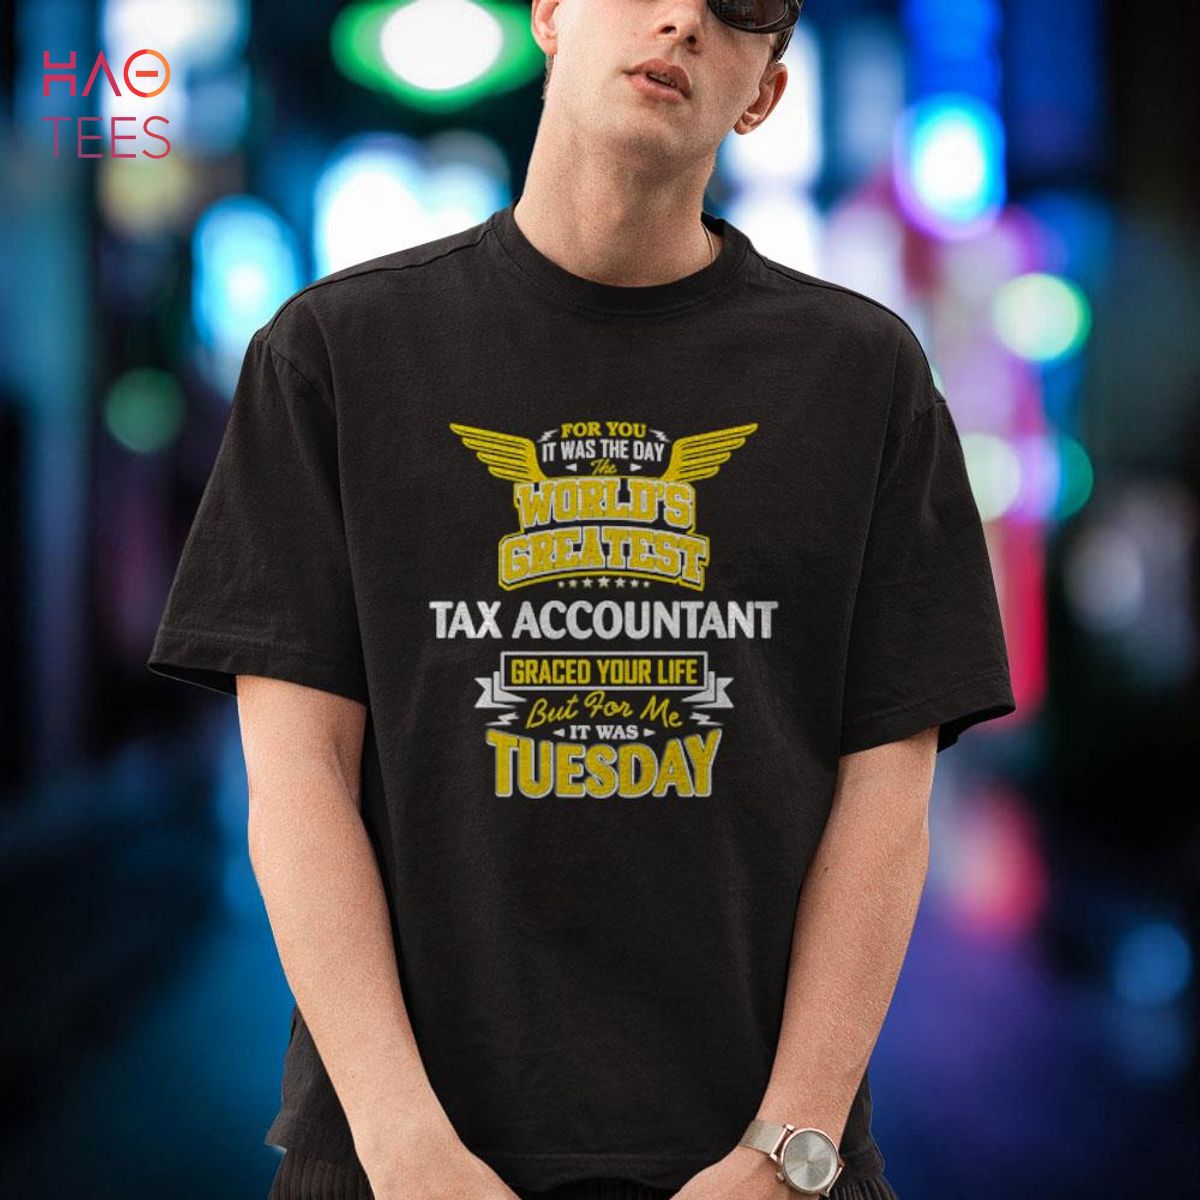 Tax Accountant Idea Funny World’s Greatest – Tax Accountant Shirt